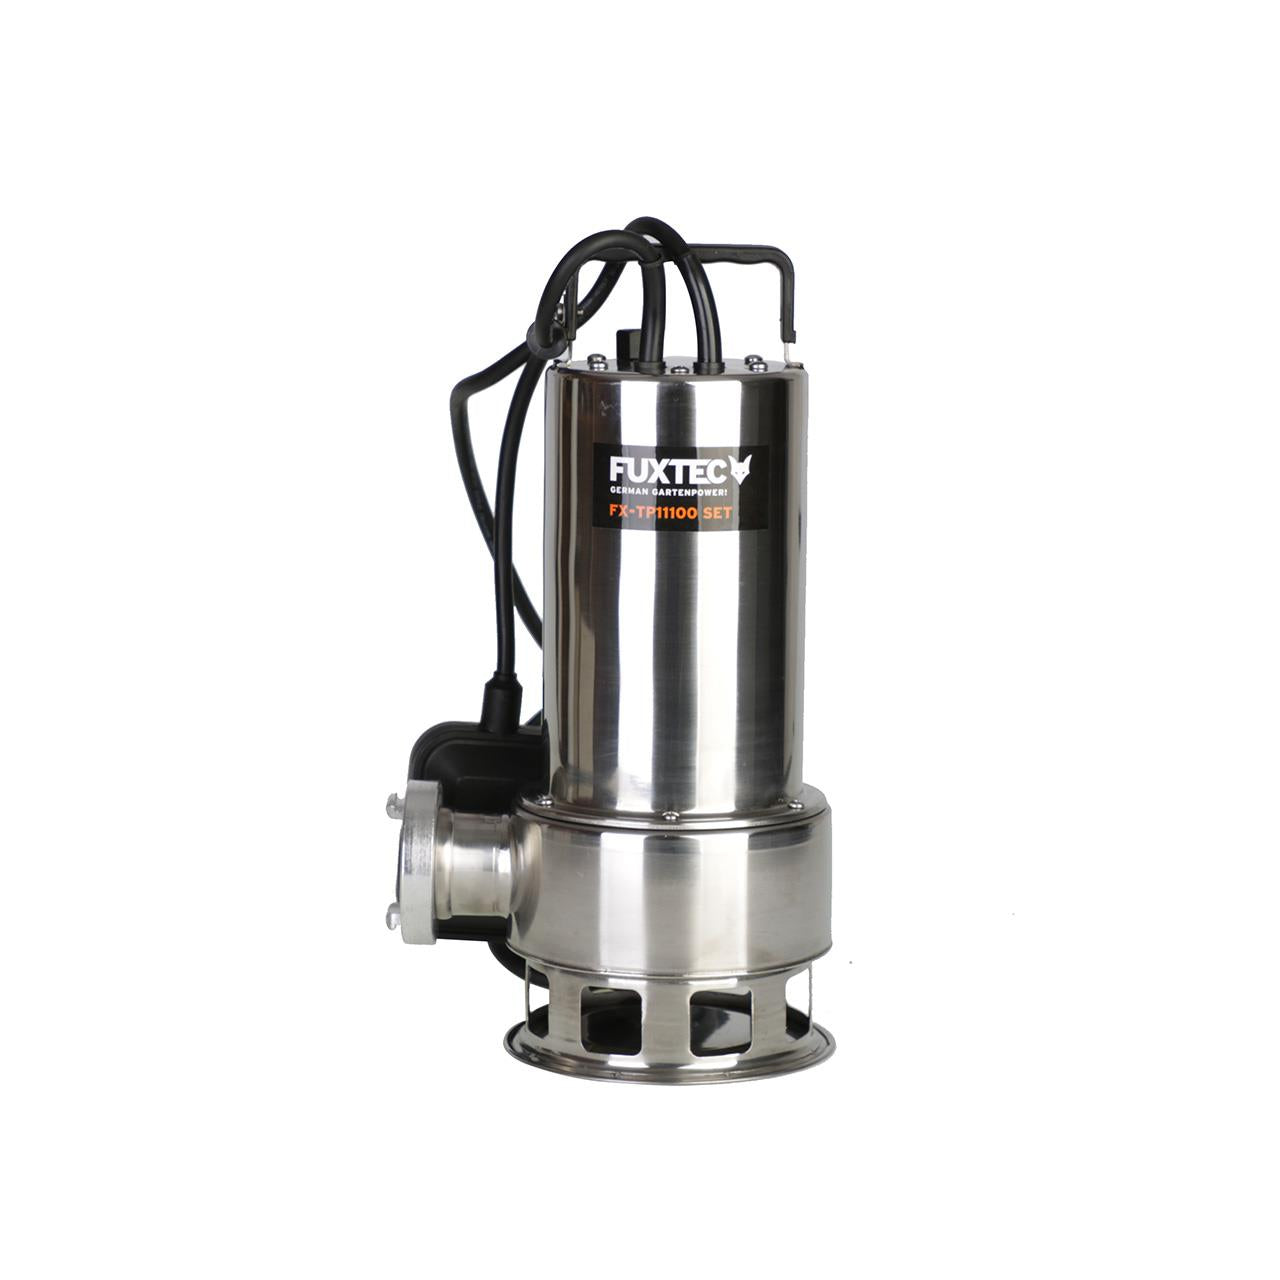 FUXTEC Tauchpumpe - Schmutzwasserpumpe FX-TP11000 INOX (Edelstahl) - 1100 Watt